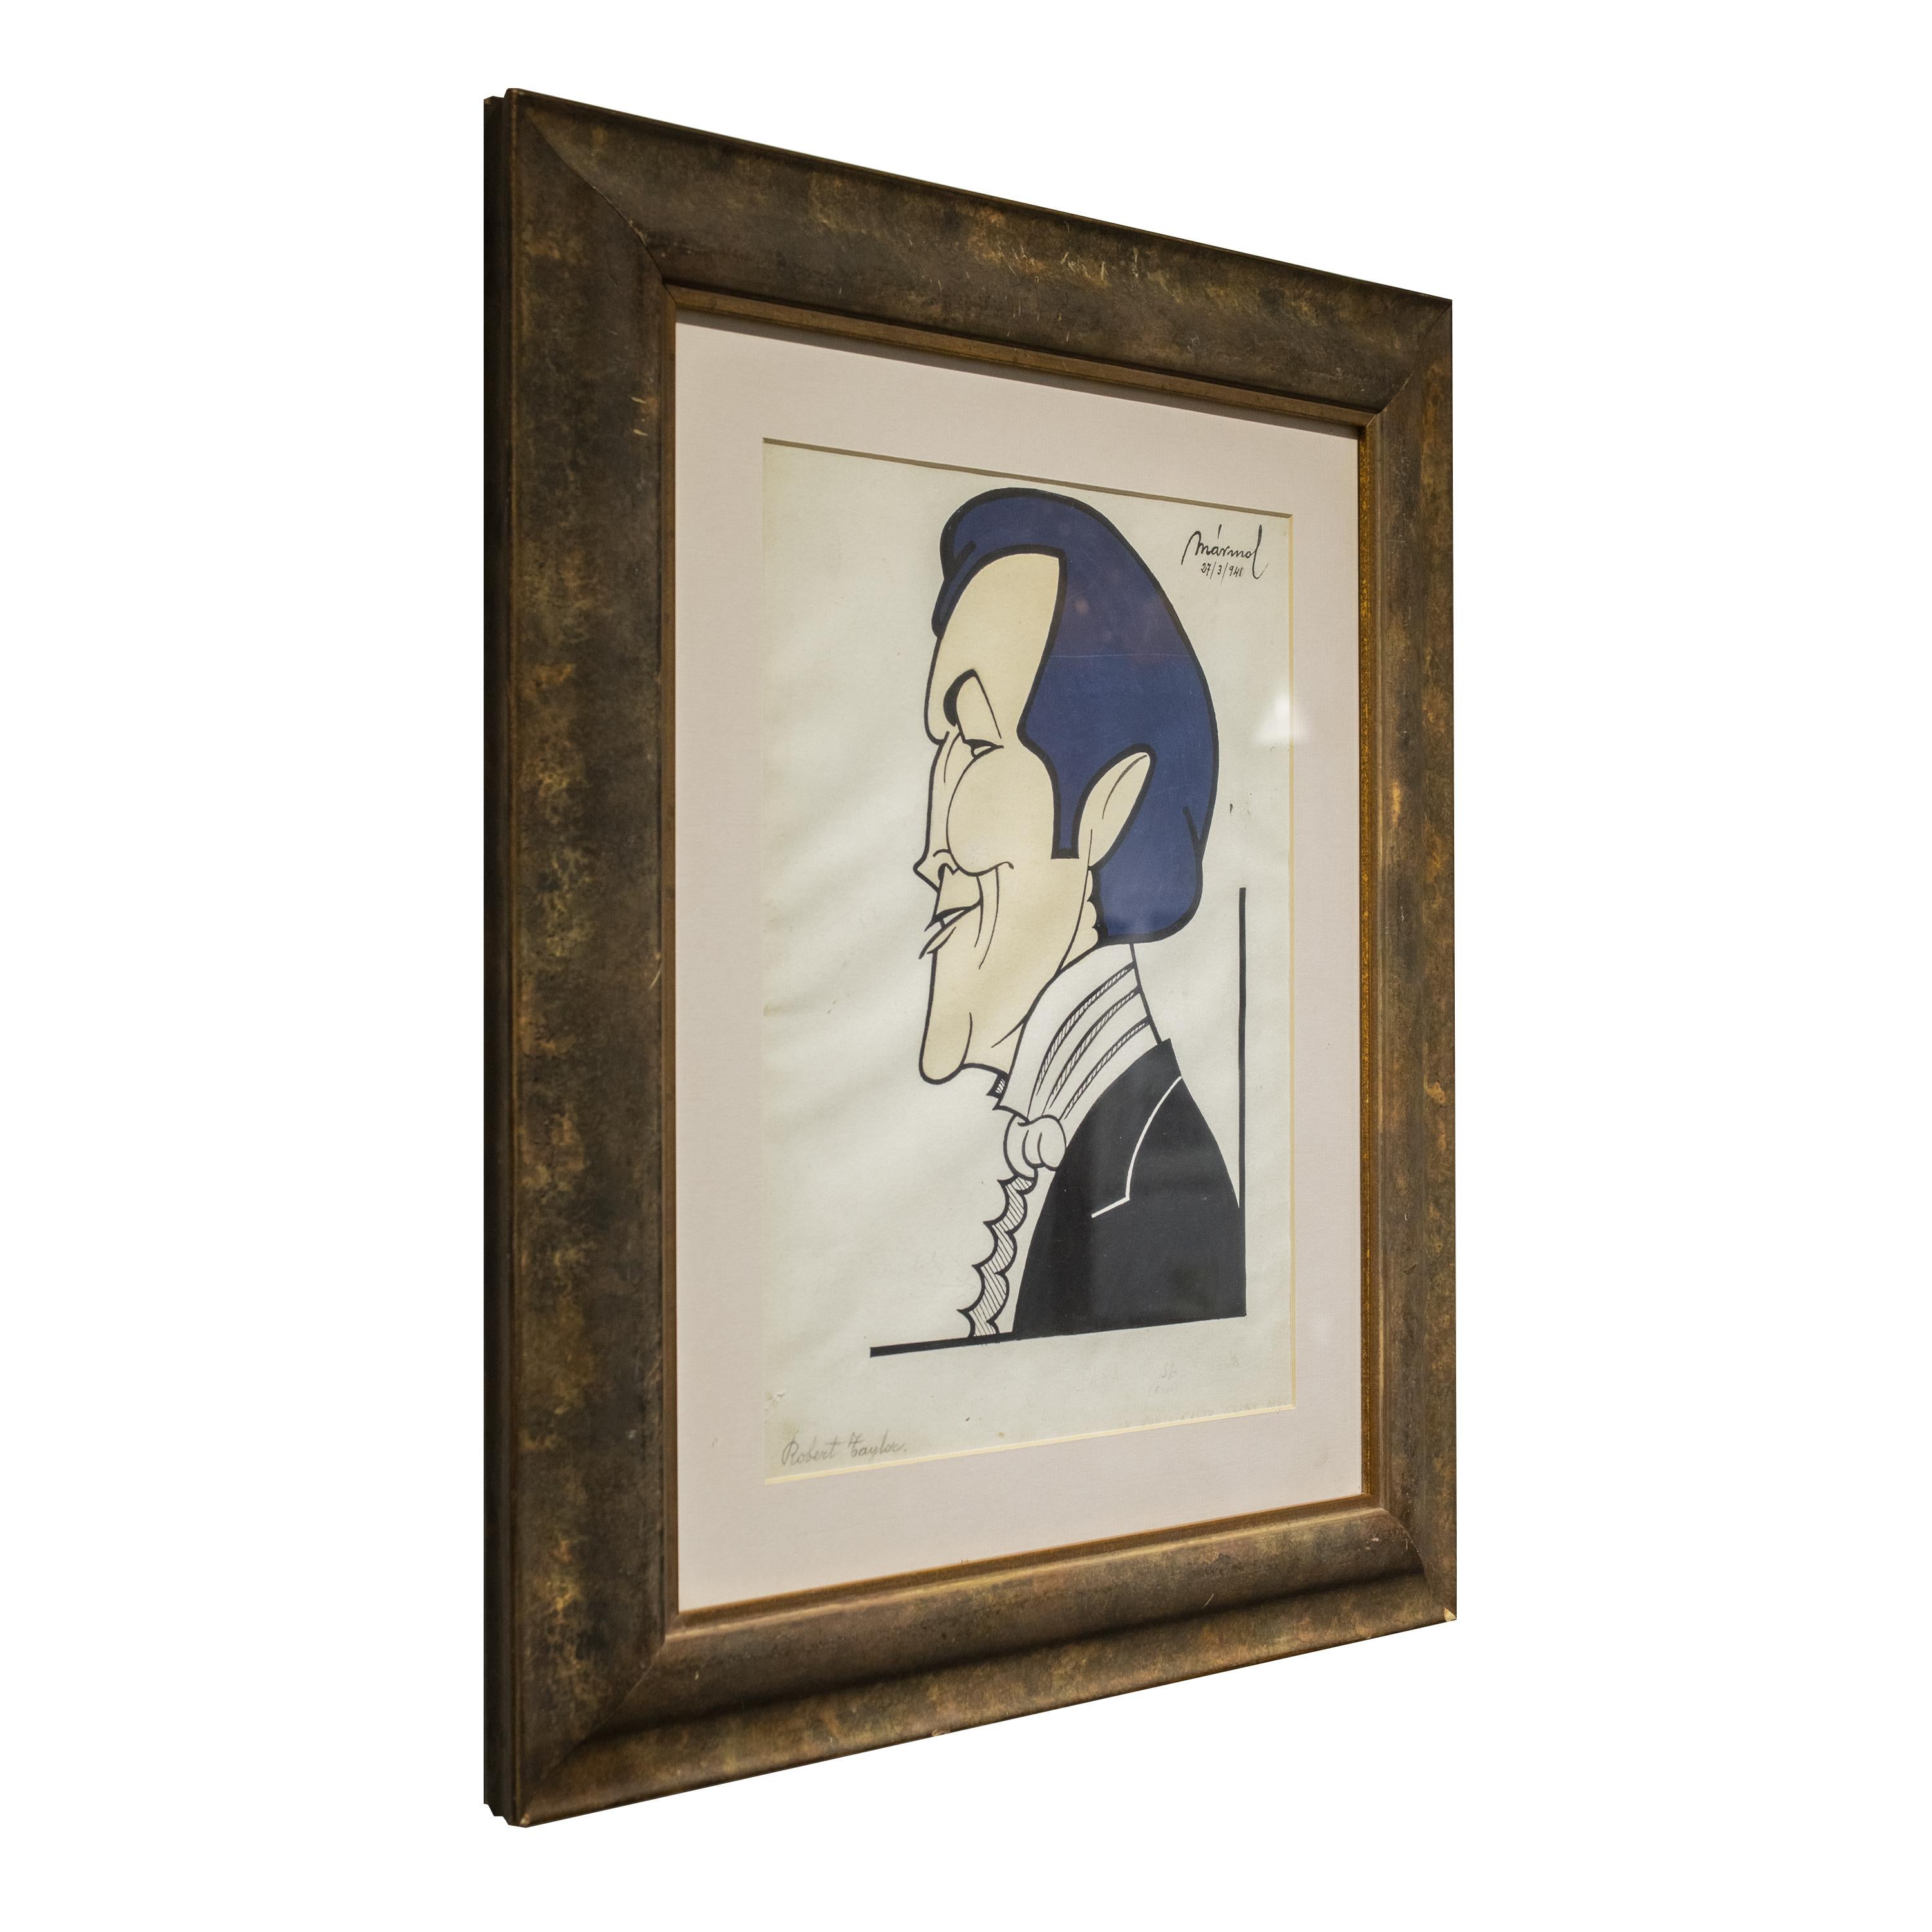 John Barrymore portrait handrawed by Mármol in 1939.
Ink on paper with wooden framed.
 